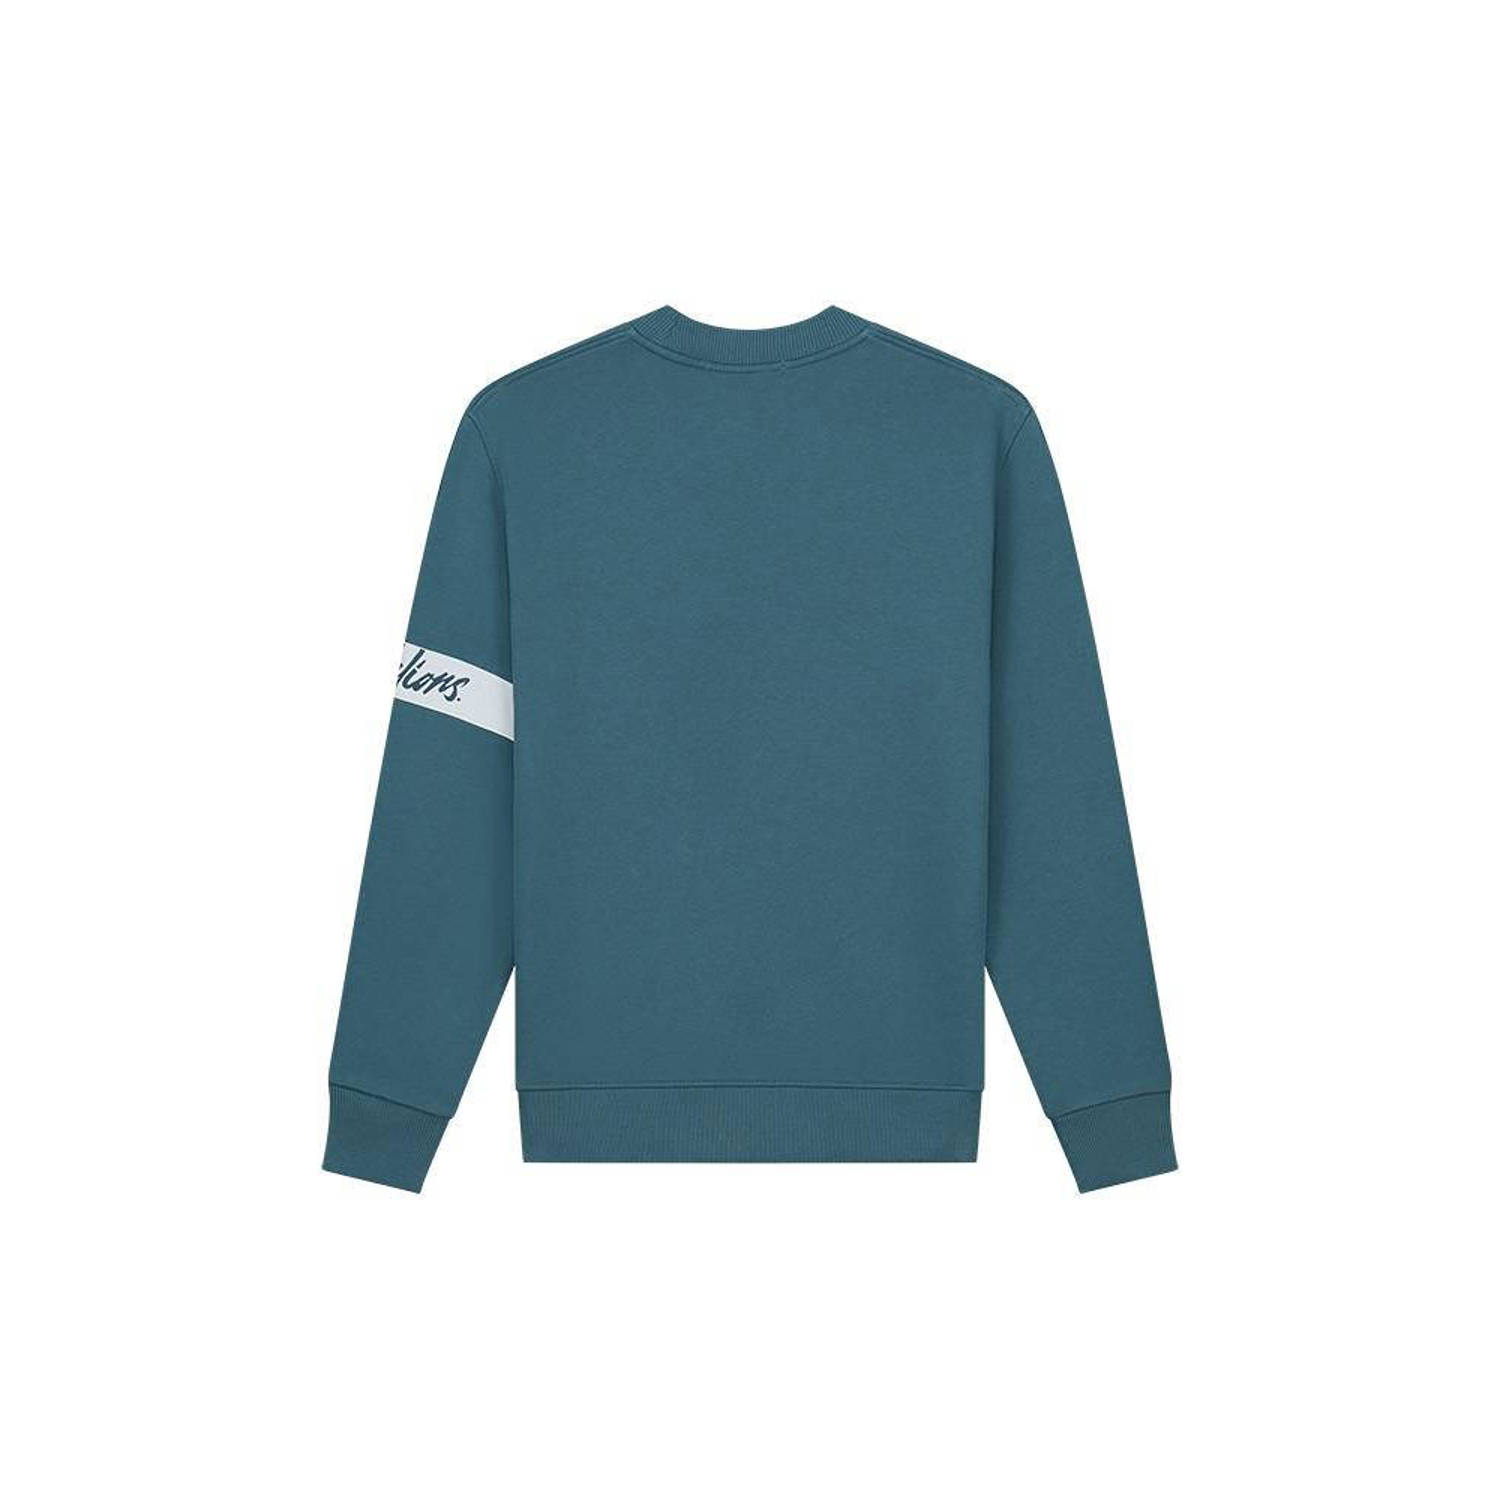 Malelions sweater met logo petrol white